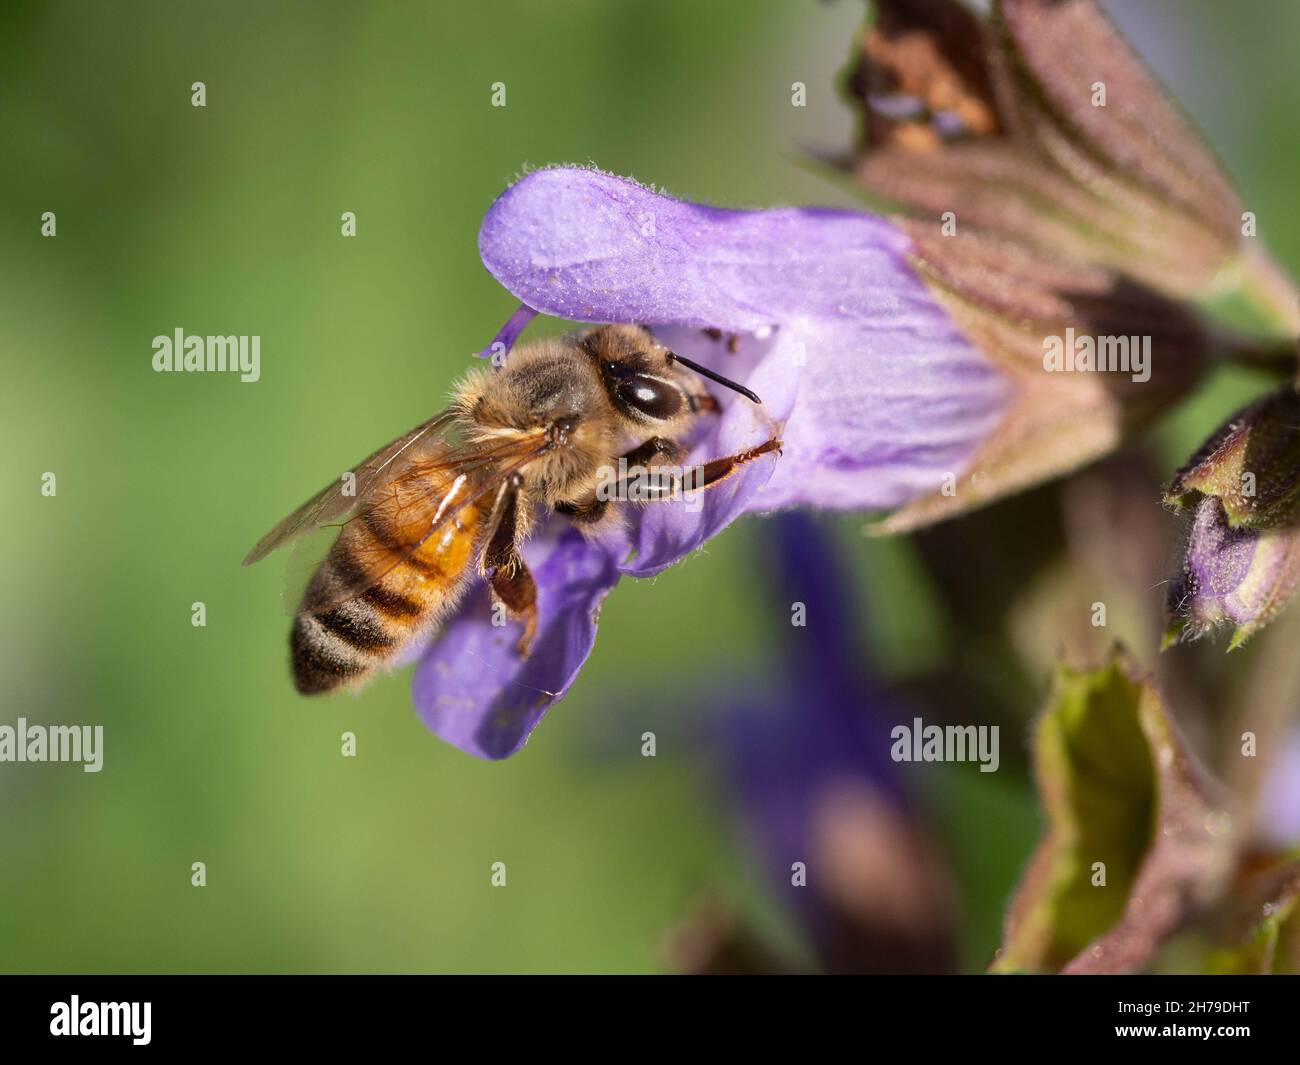 Honey bee on salvia flower Stock Photo